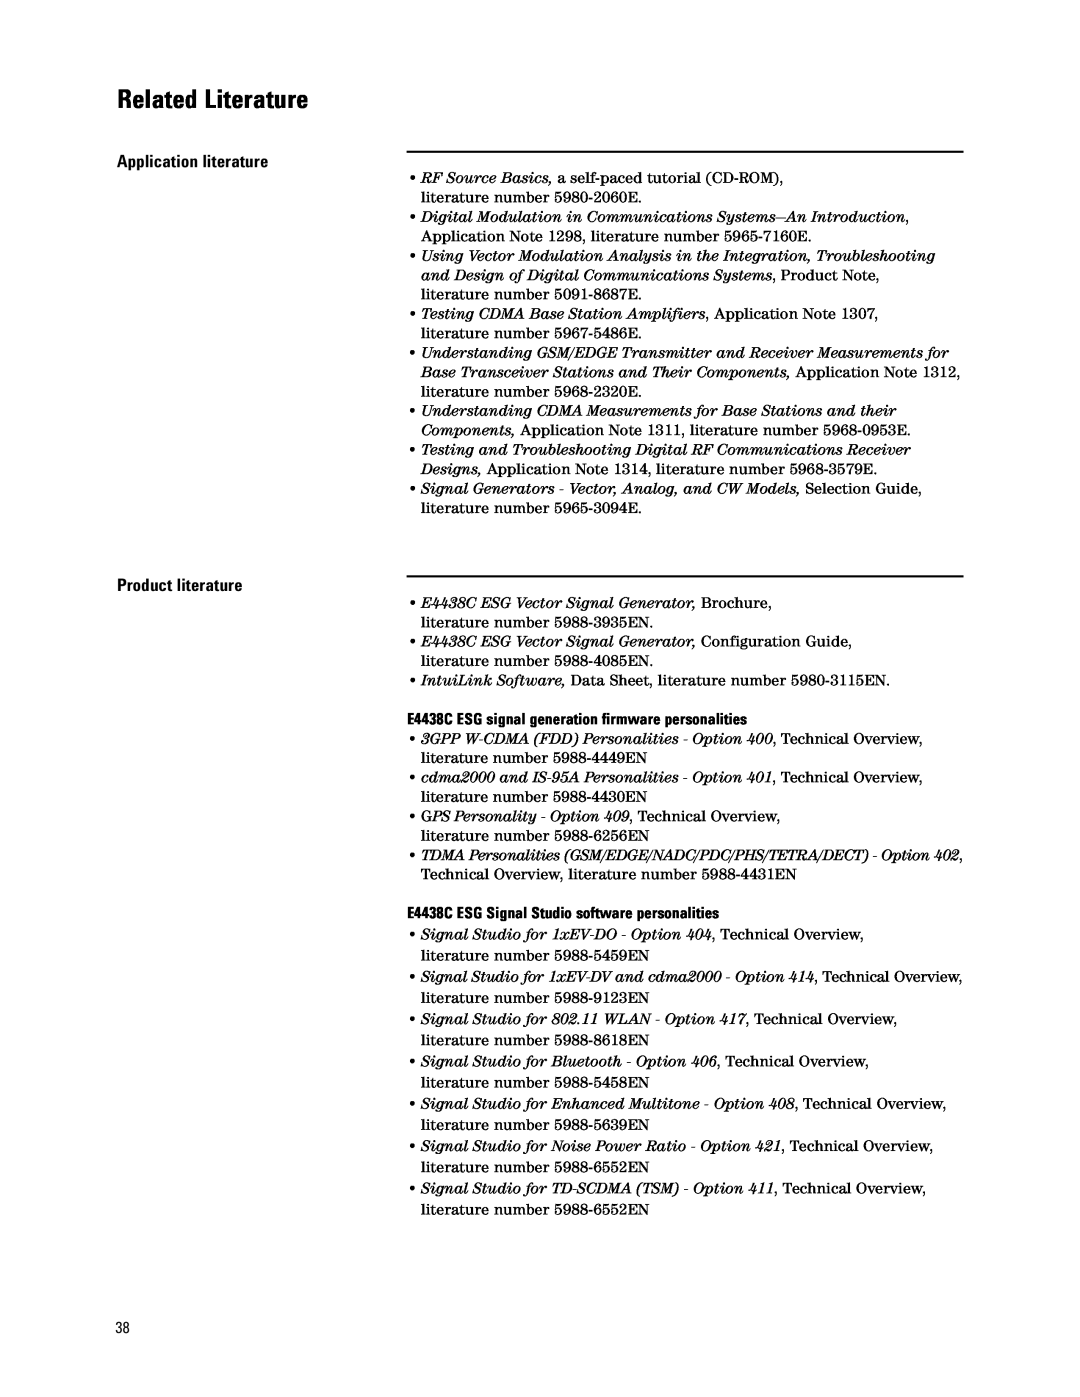 Agilent Technologies E4438C manual Related Literature, Application literature, Product literature 